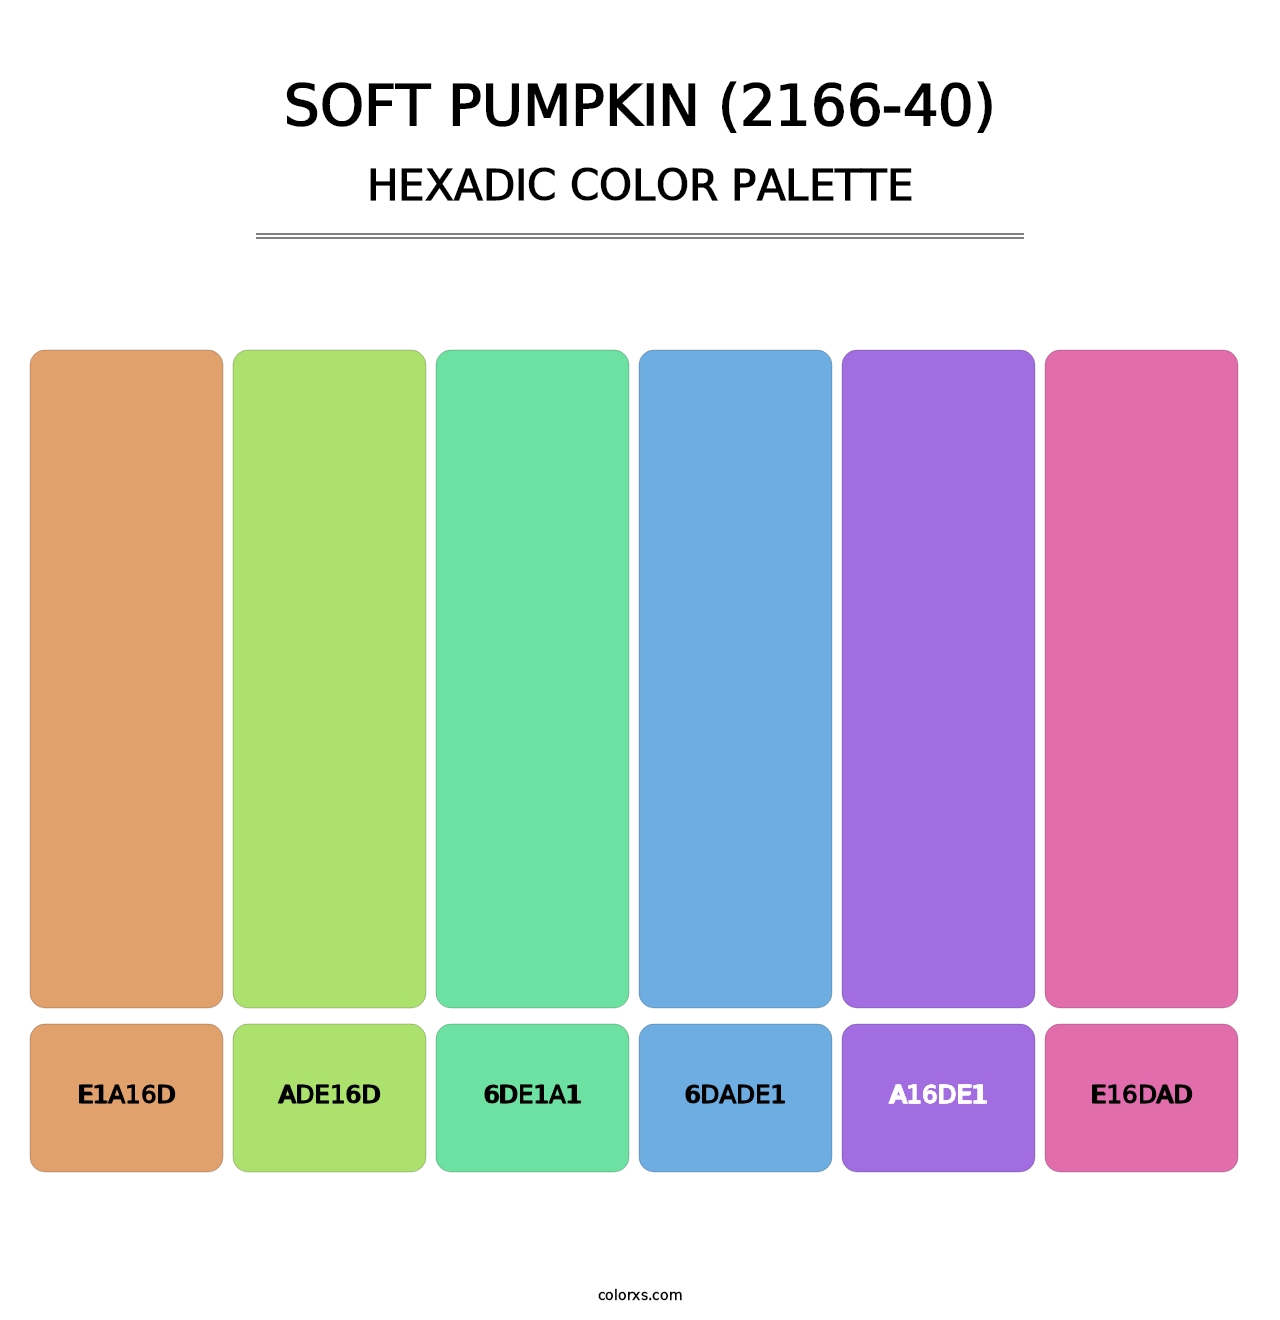 Soft Pumpkin (2166-40) - Hexadic Color Palette